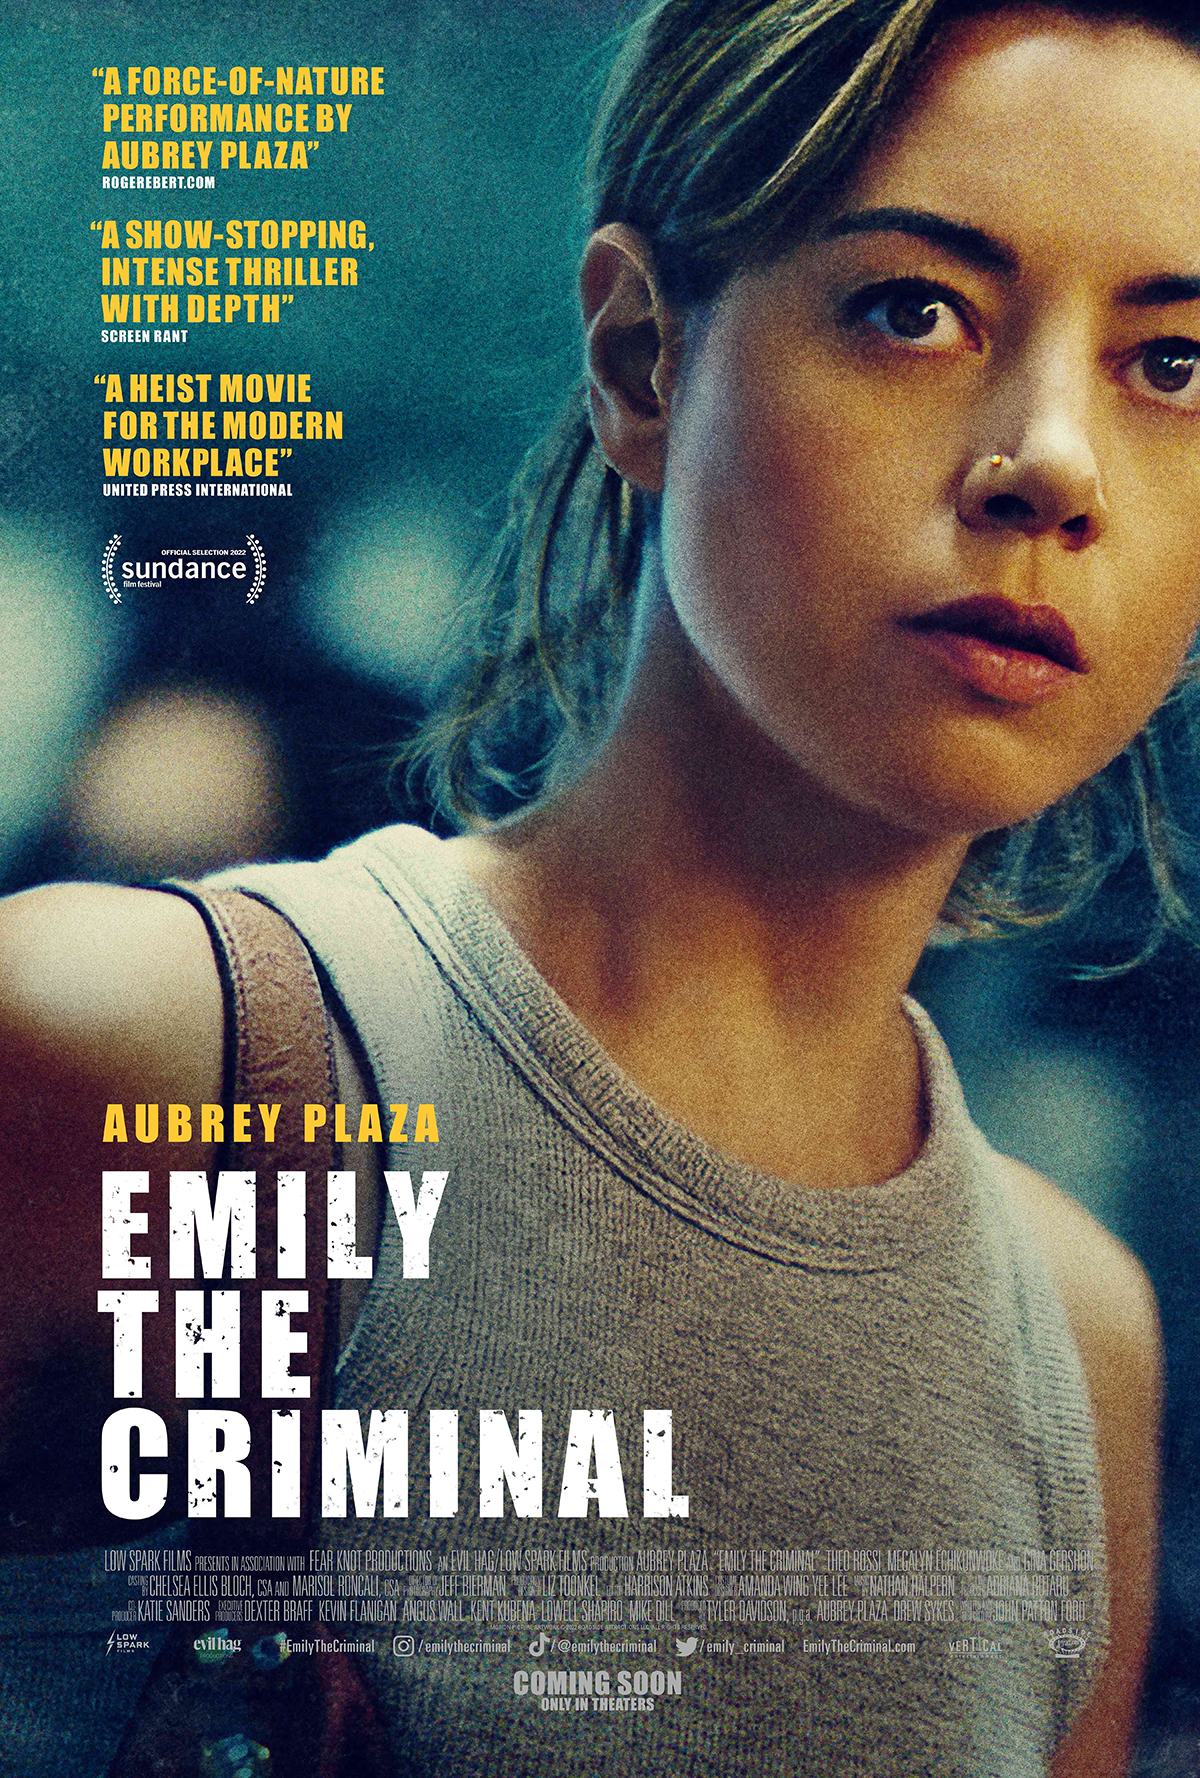 Emily The Criminal Starring Aubrey Plaza